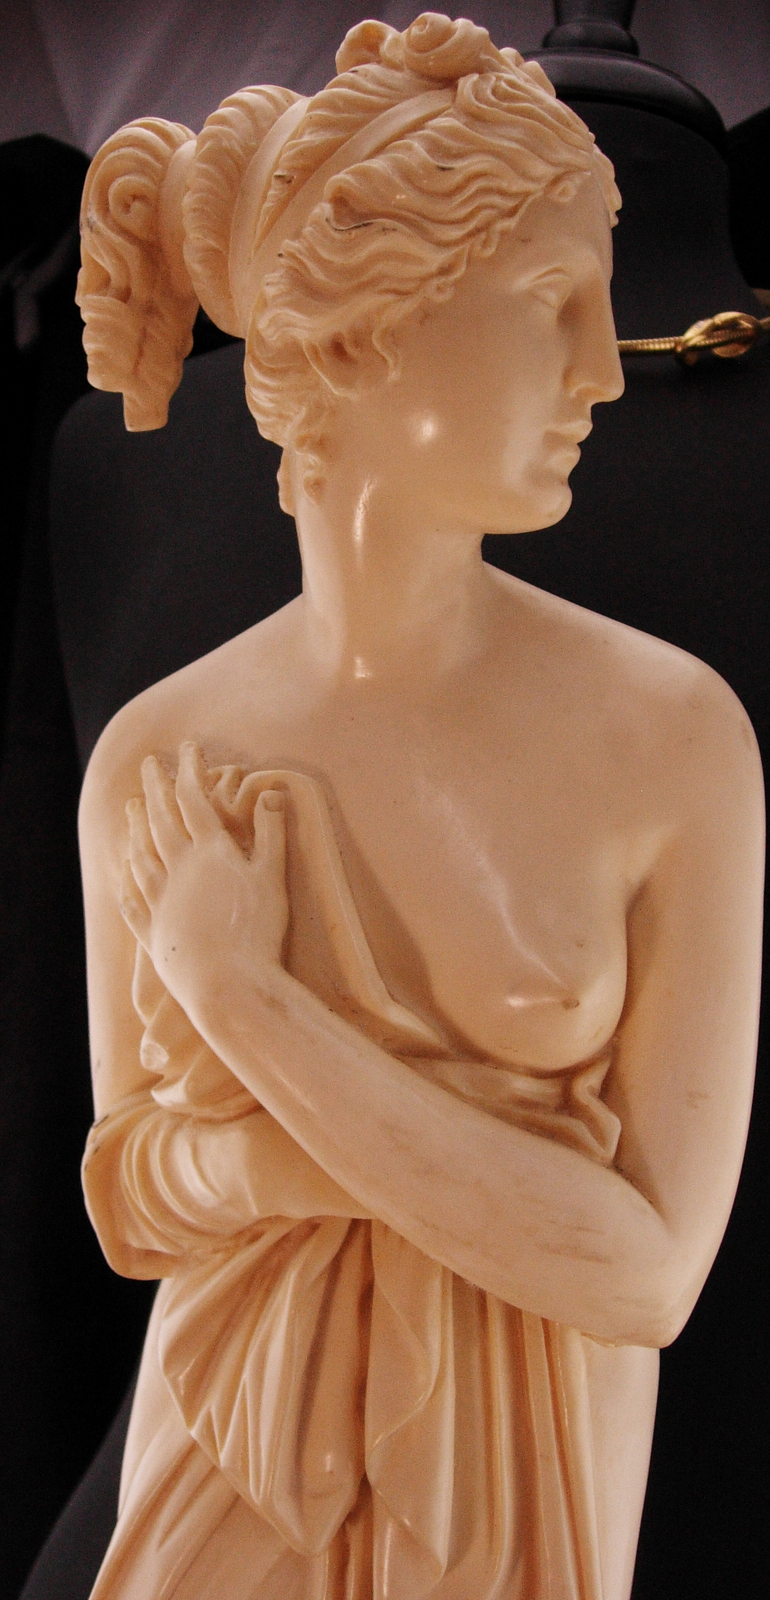 Primary image for 25" BIG Aphrodite nude figurine - Vintage Signed Venus statue - marble Goddess  